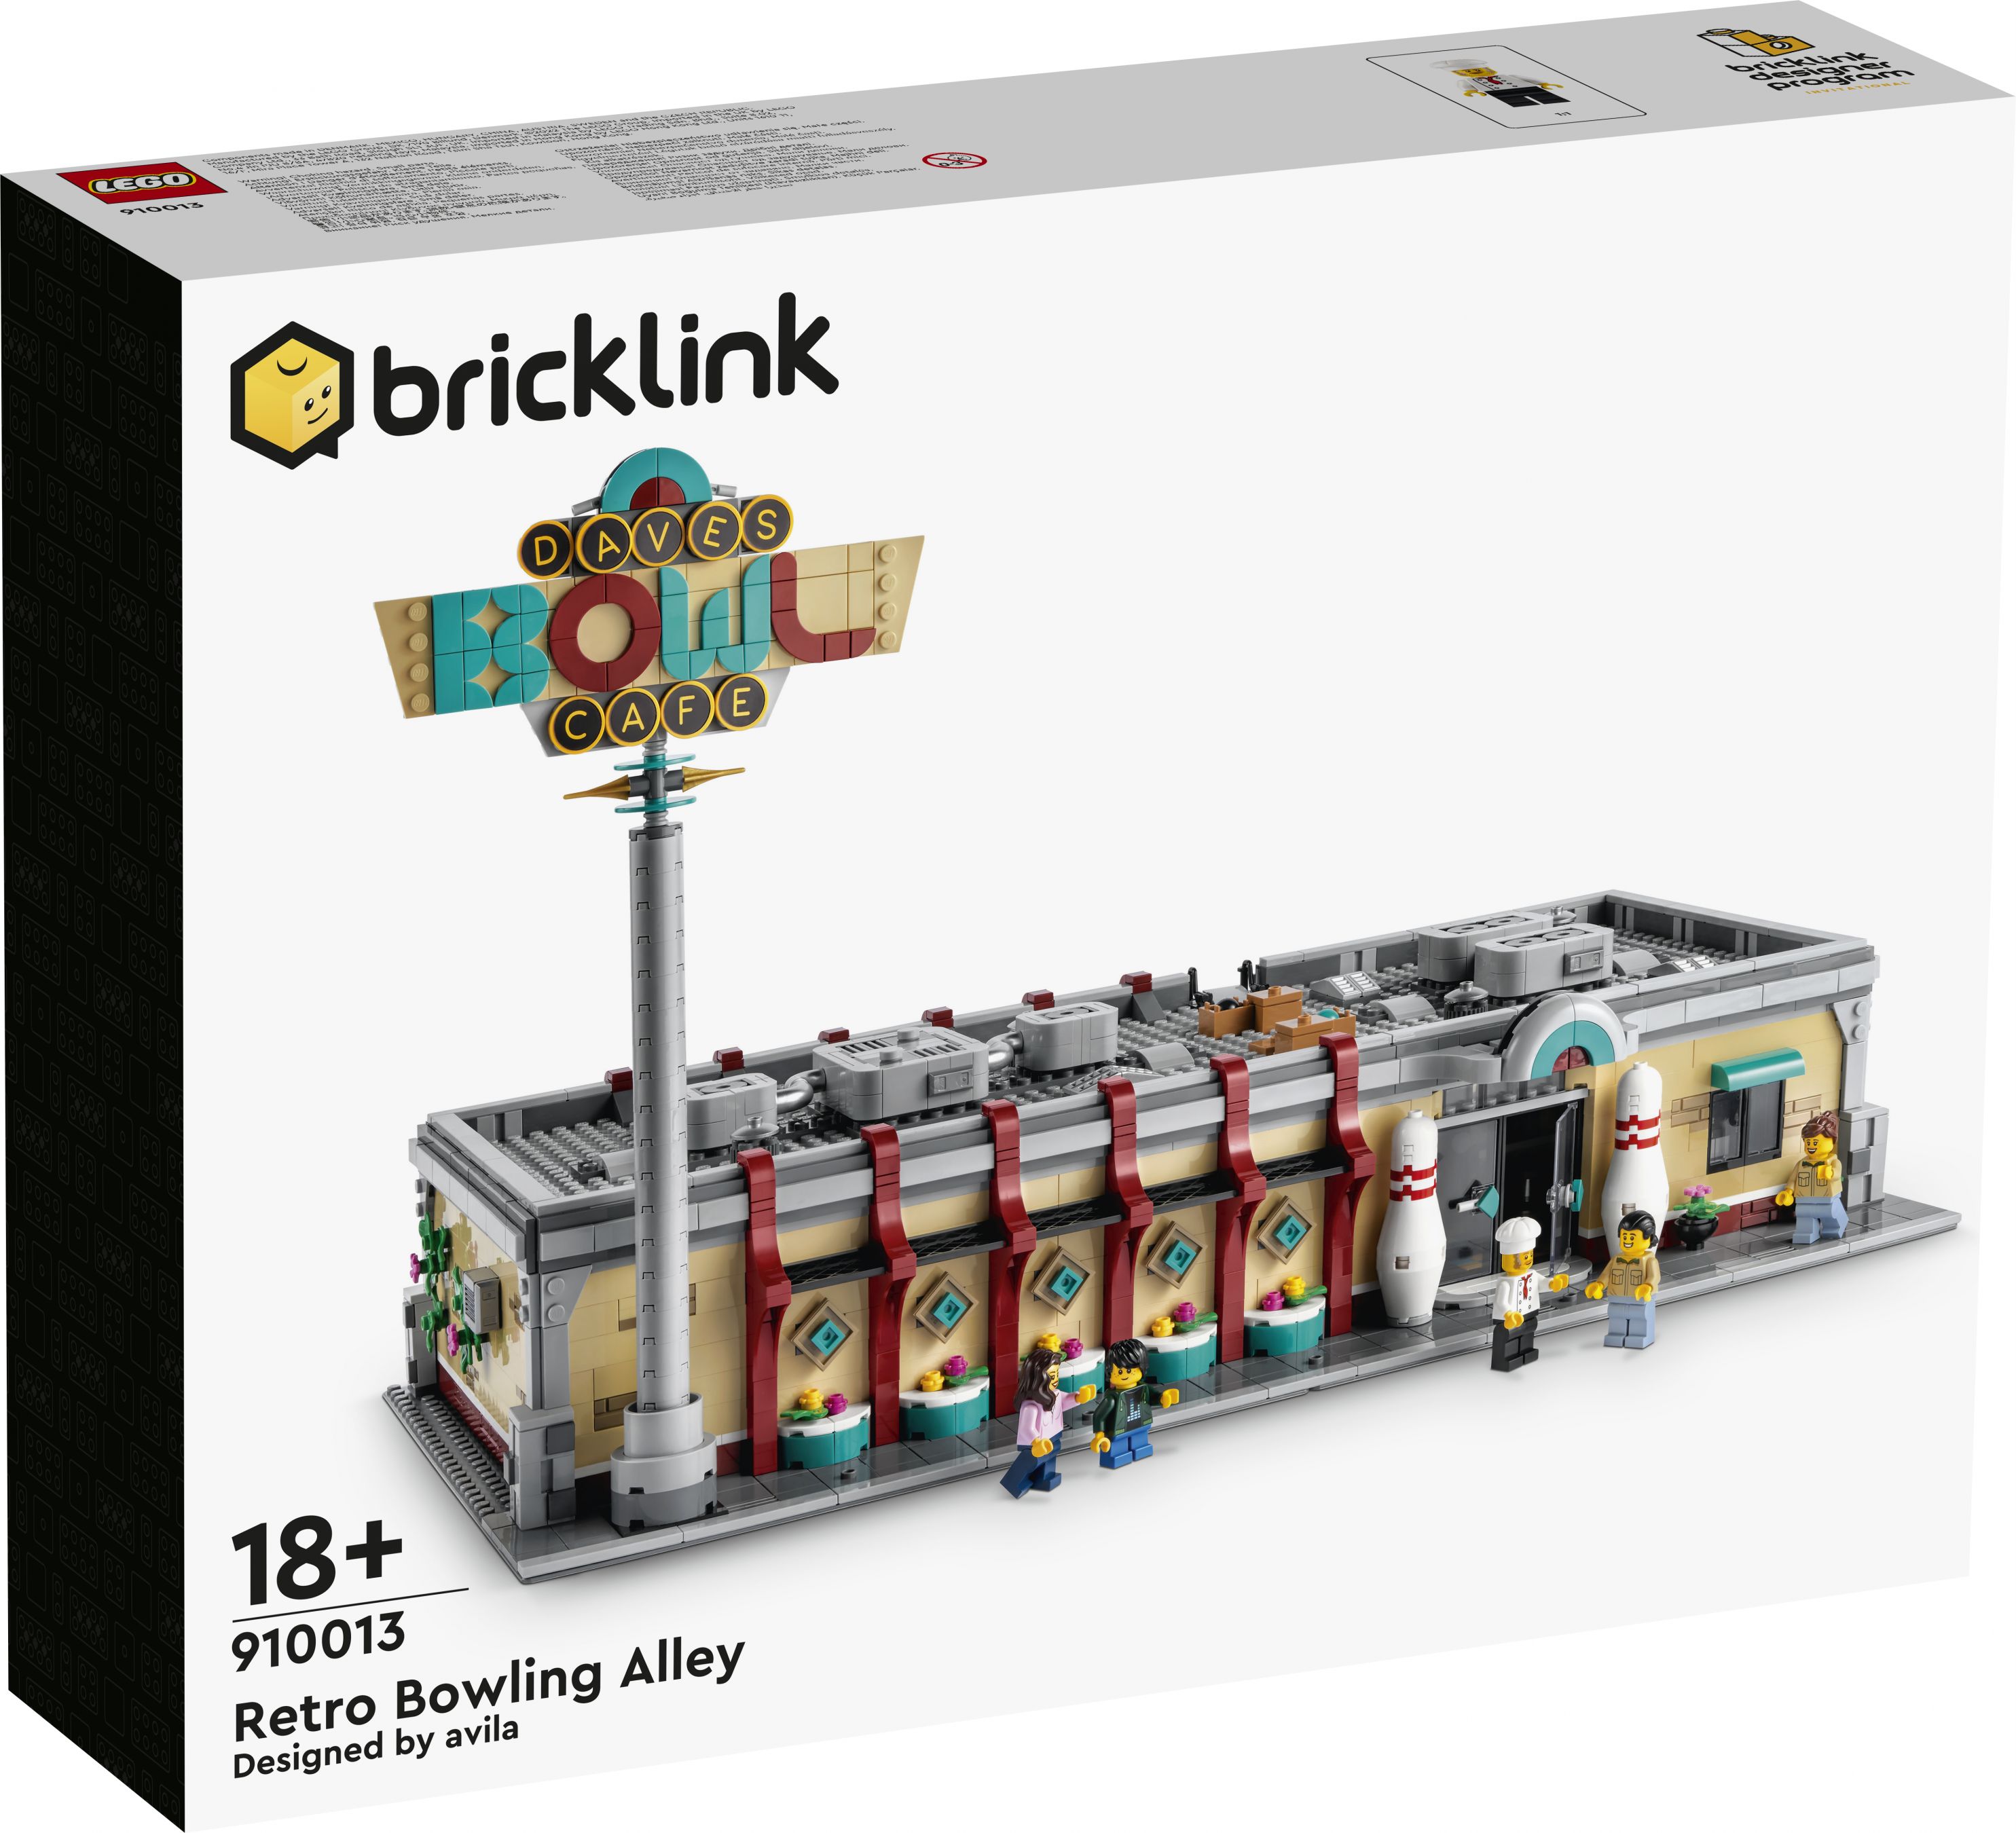 LEGO Bricklink 910013 Retro-Bowlingbahn LEGO_910013_box1_v29.jpg